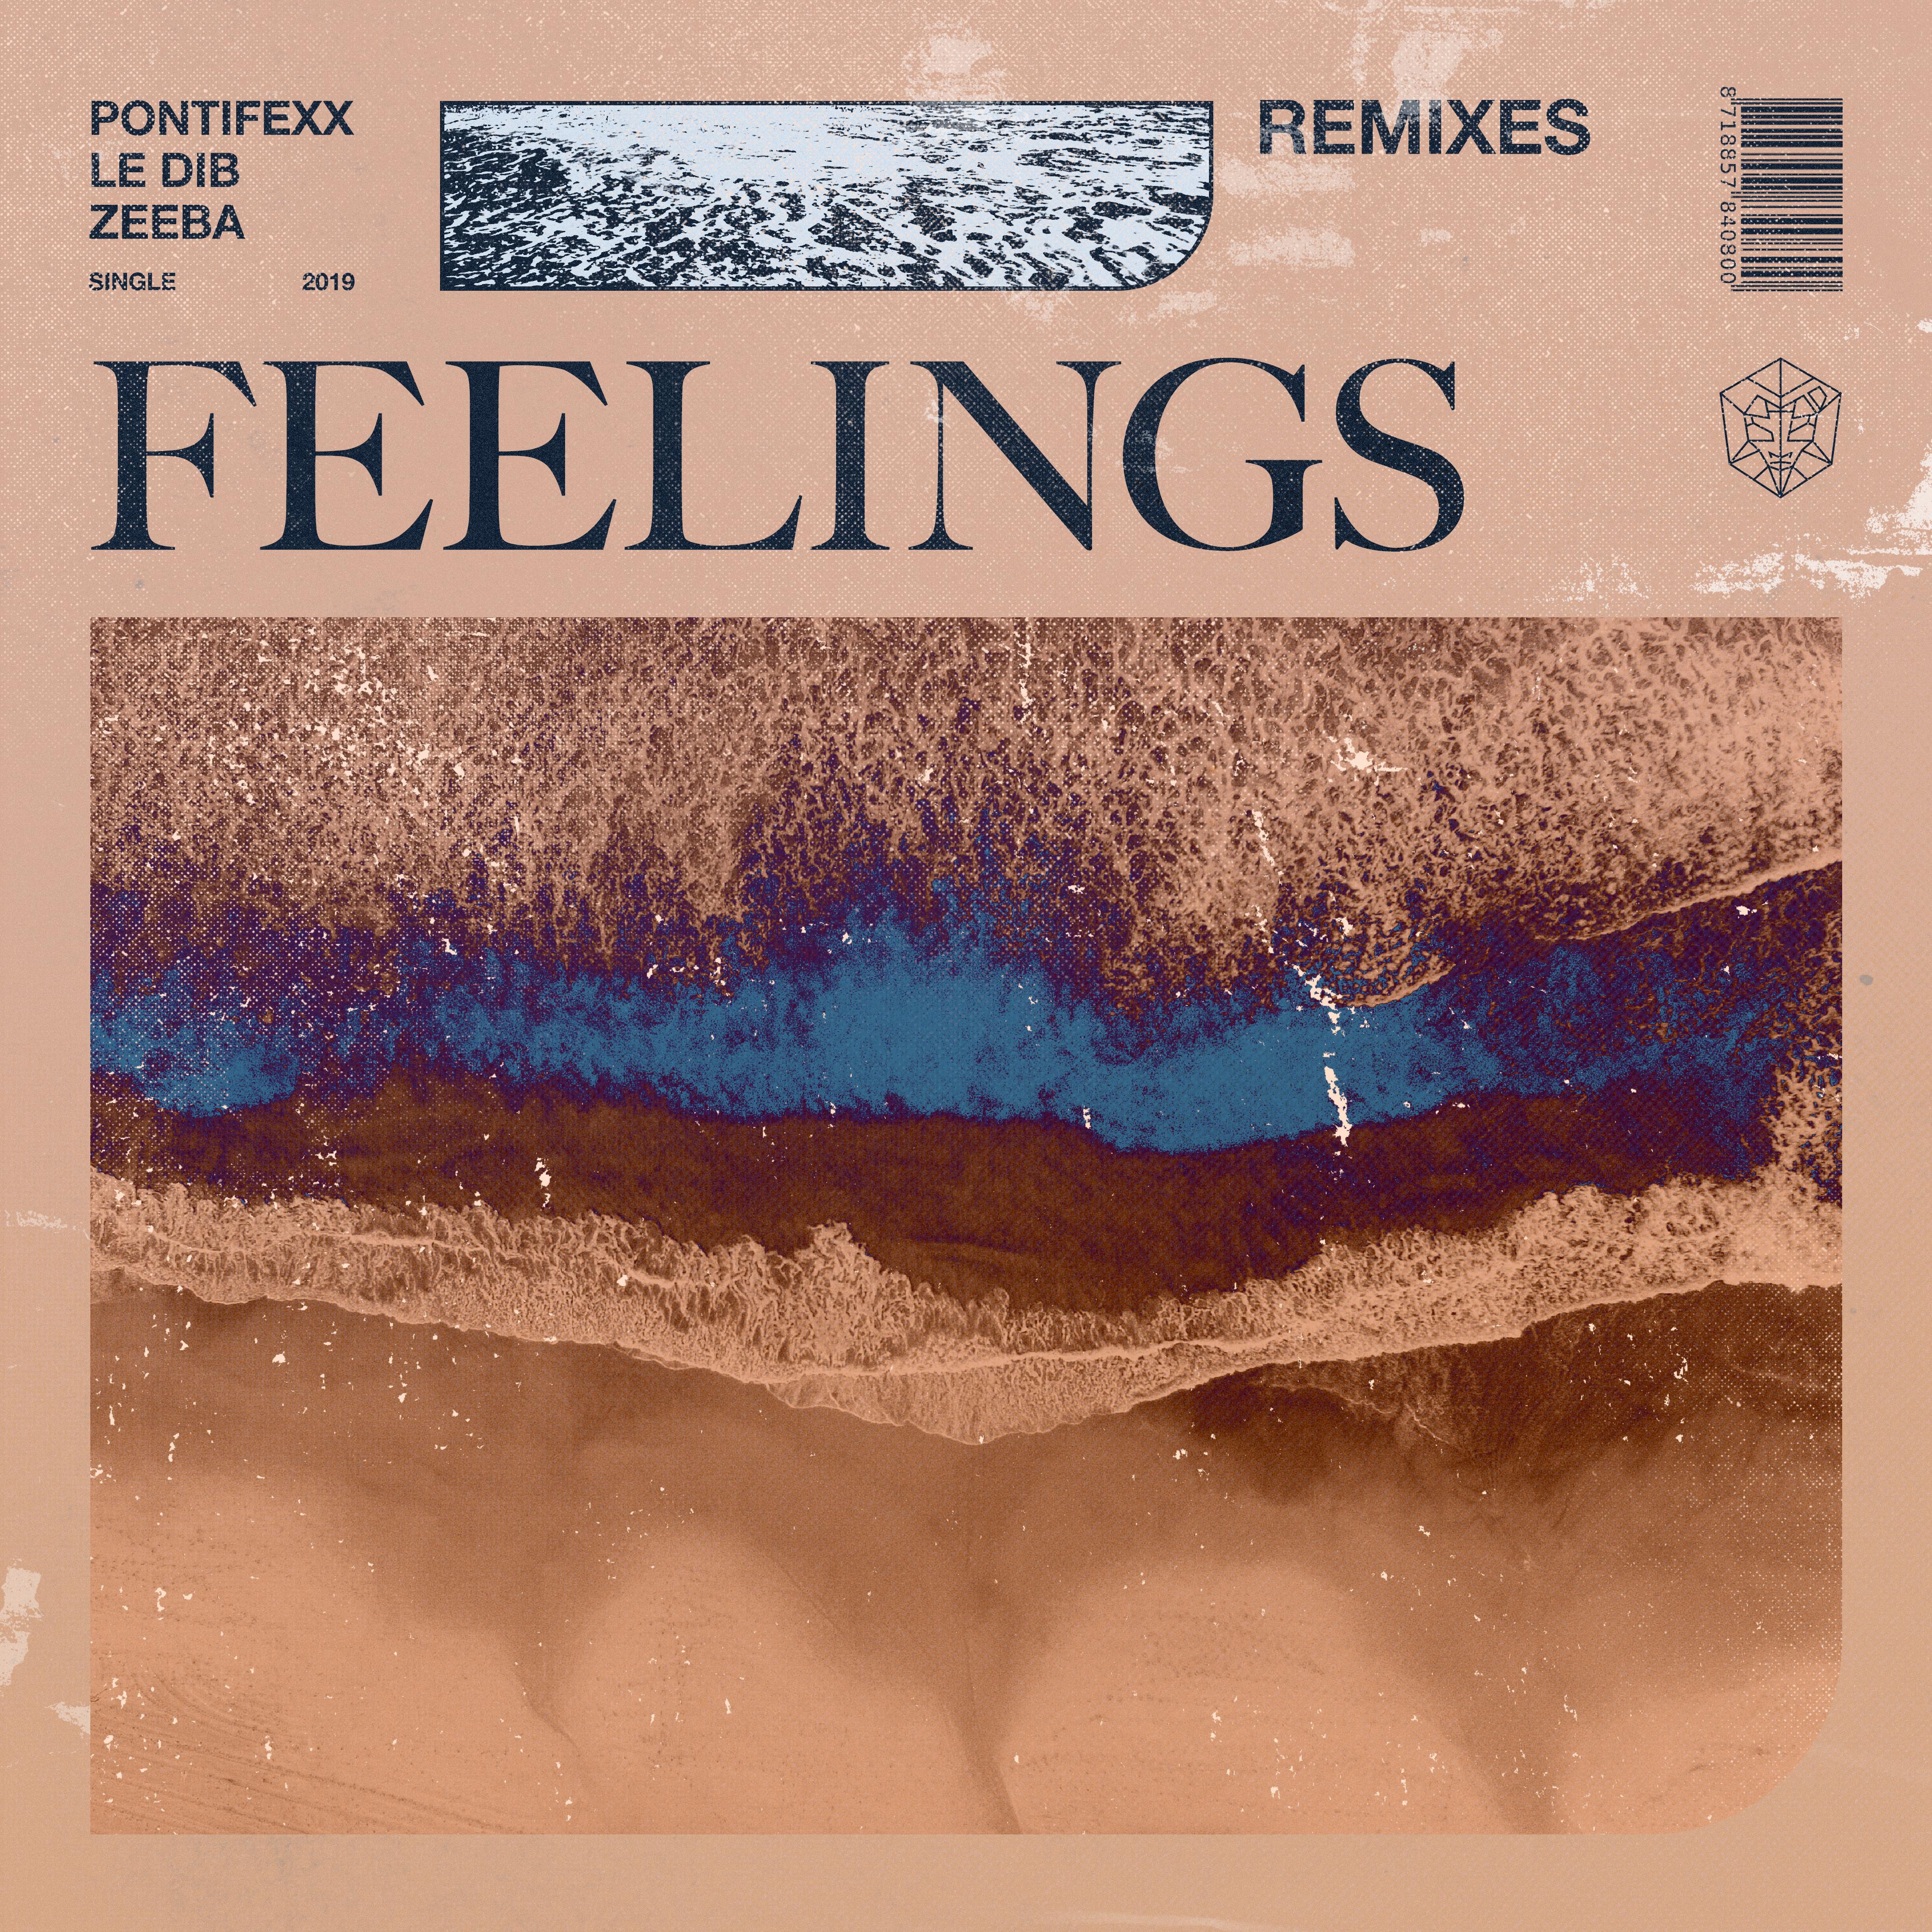 Pontifexx - Feelings (Pontifexx Remix)